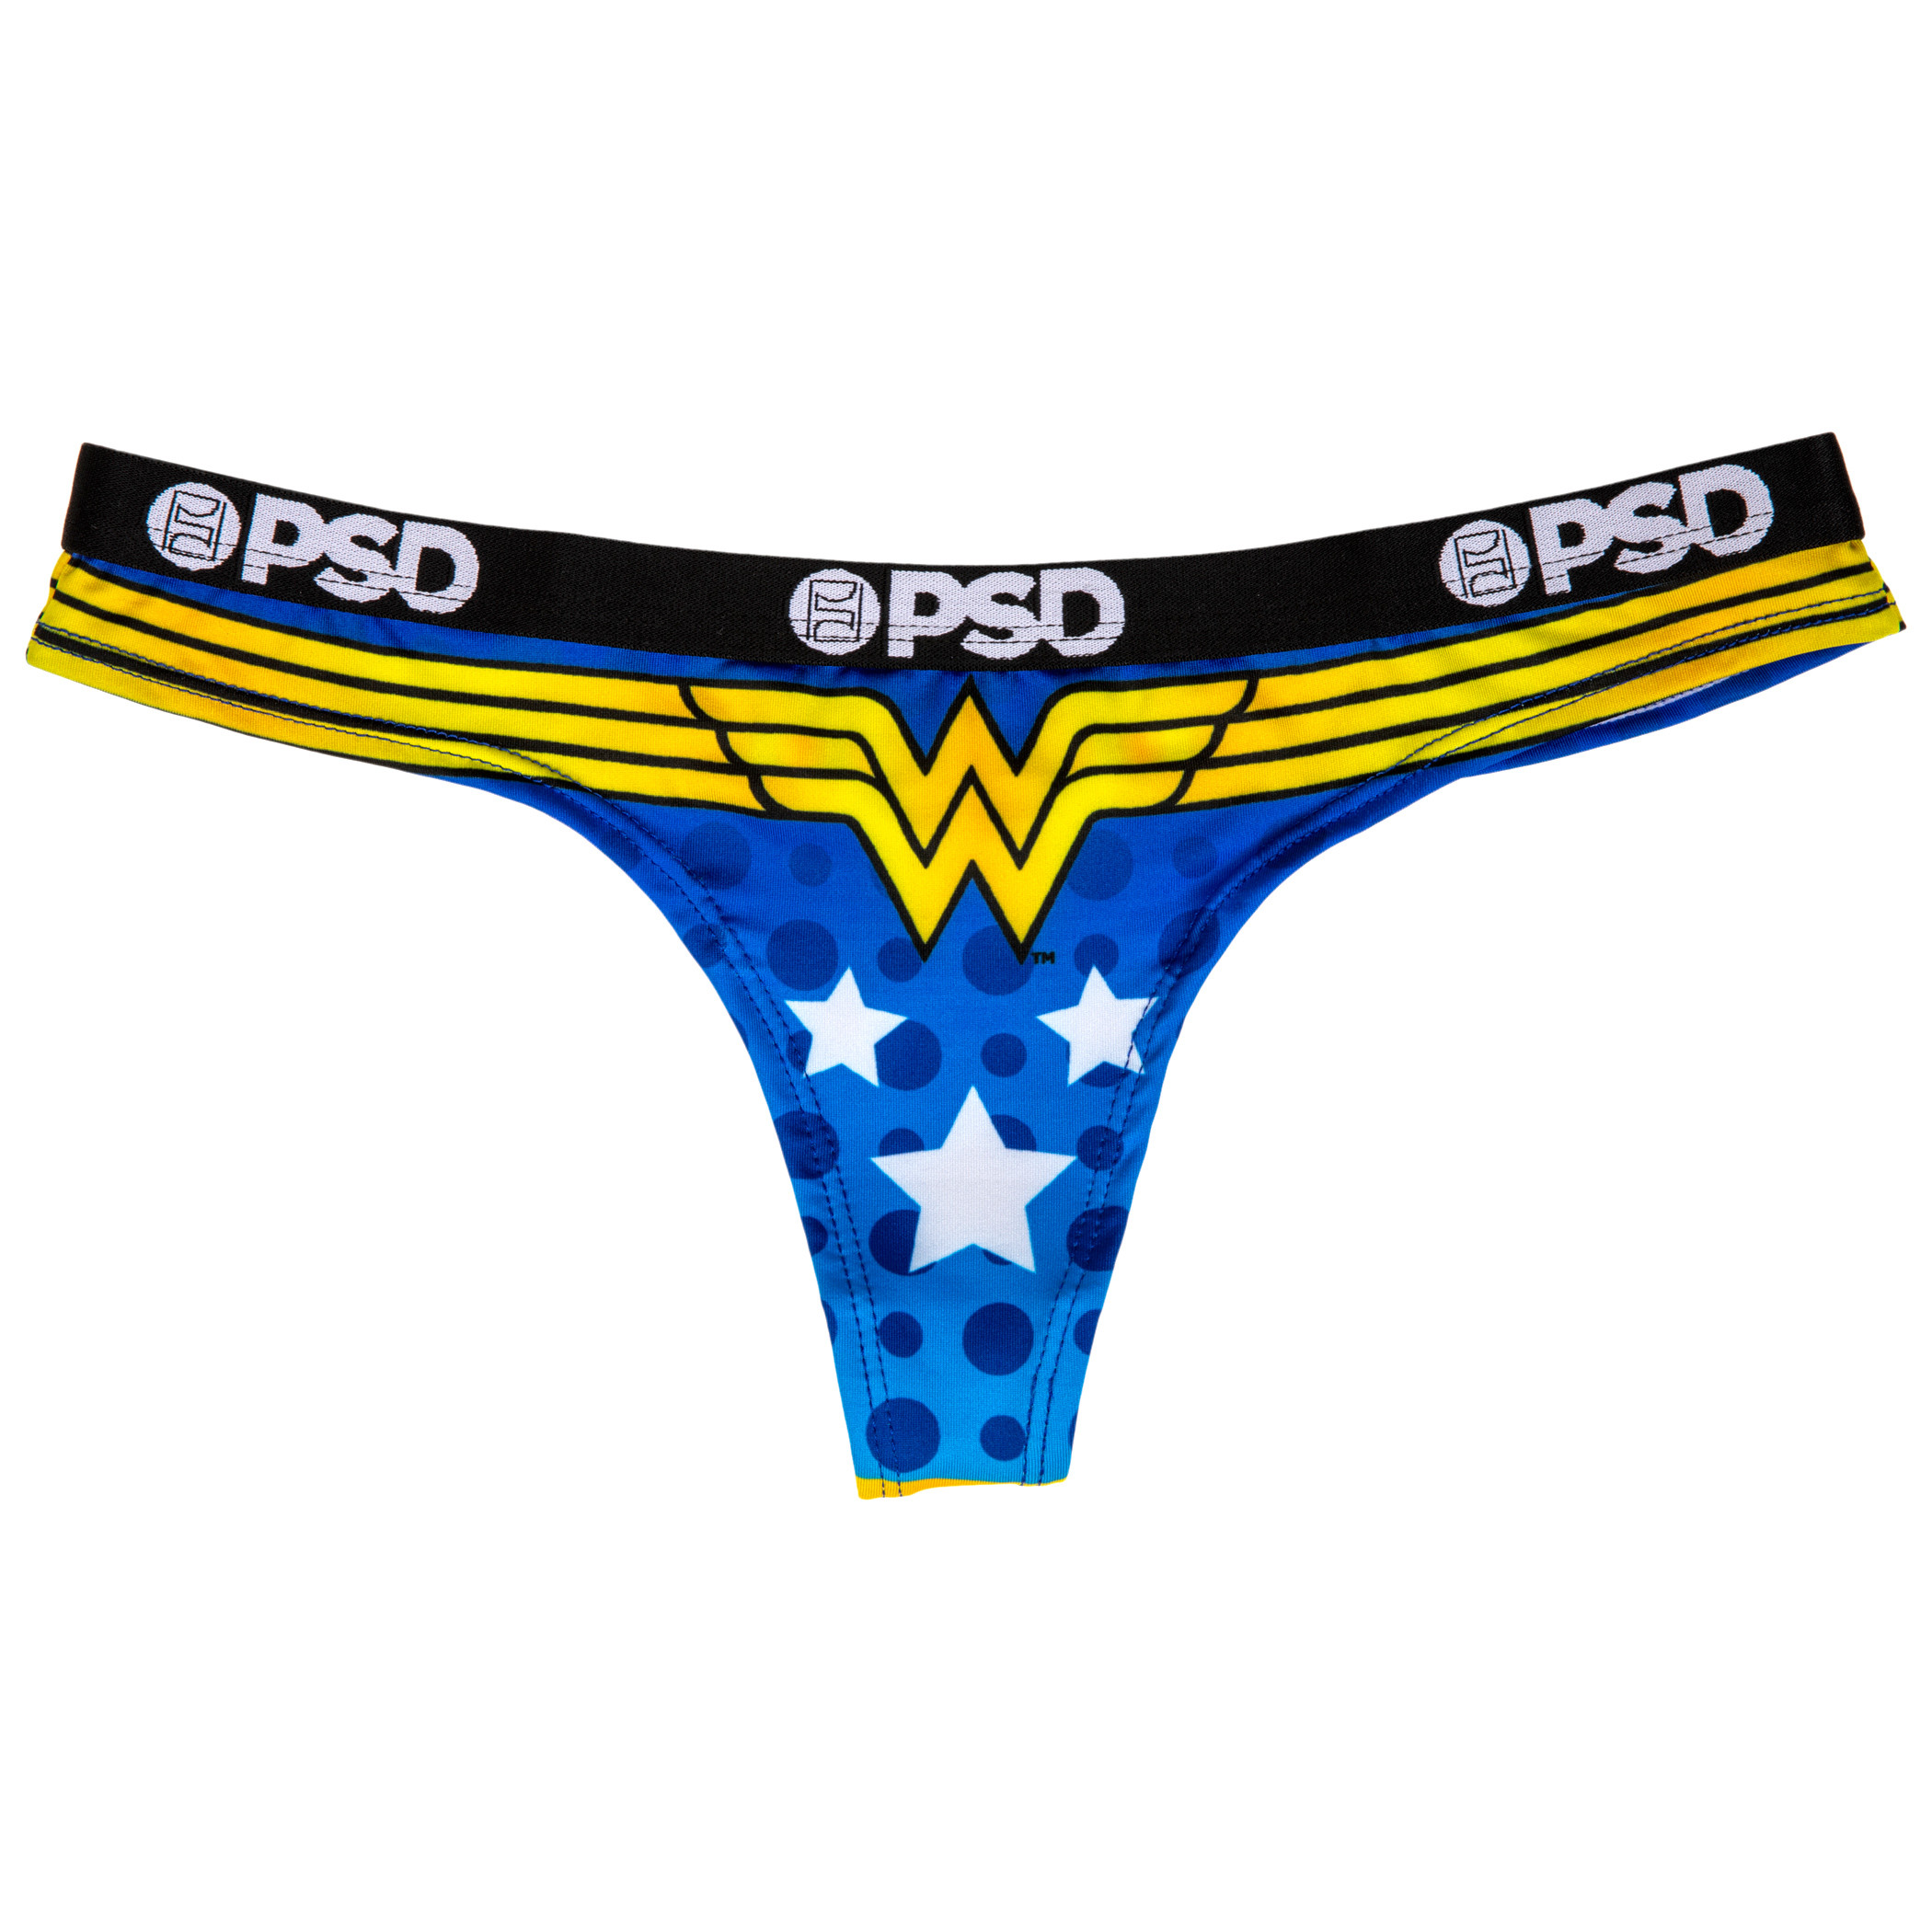 DC Wonder Woman Symbol Microfiber Blend Women's Thong Underwear